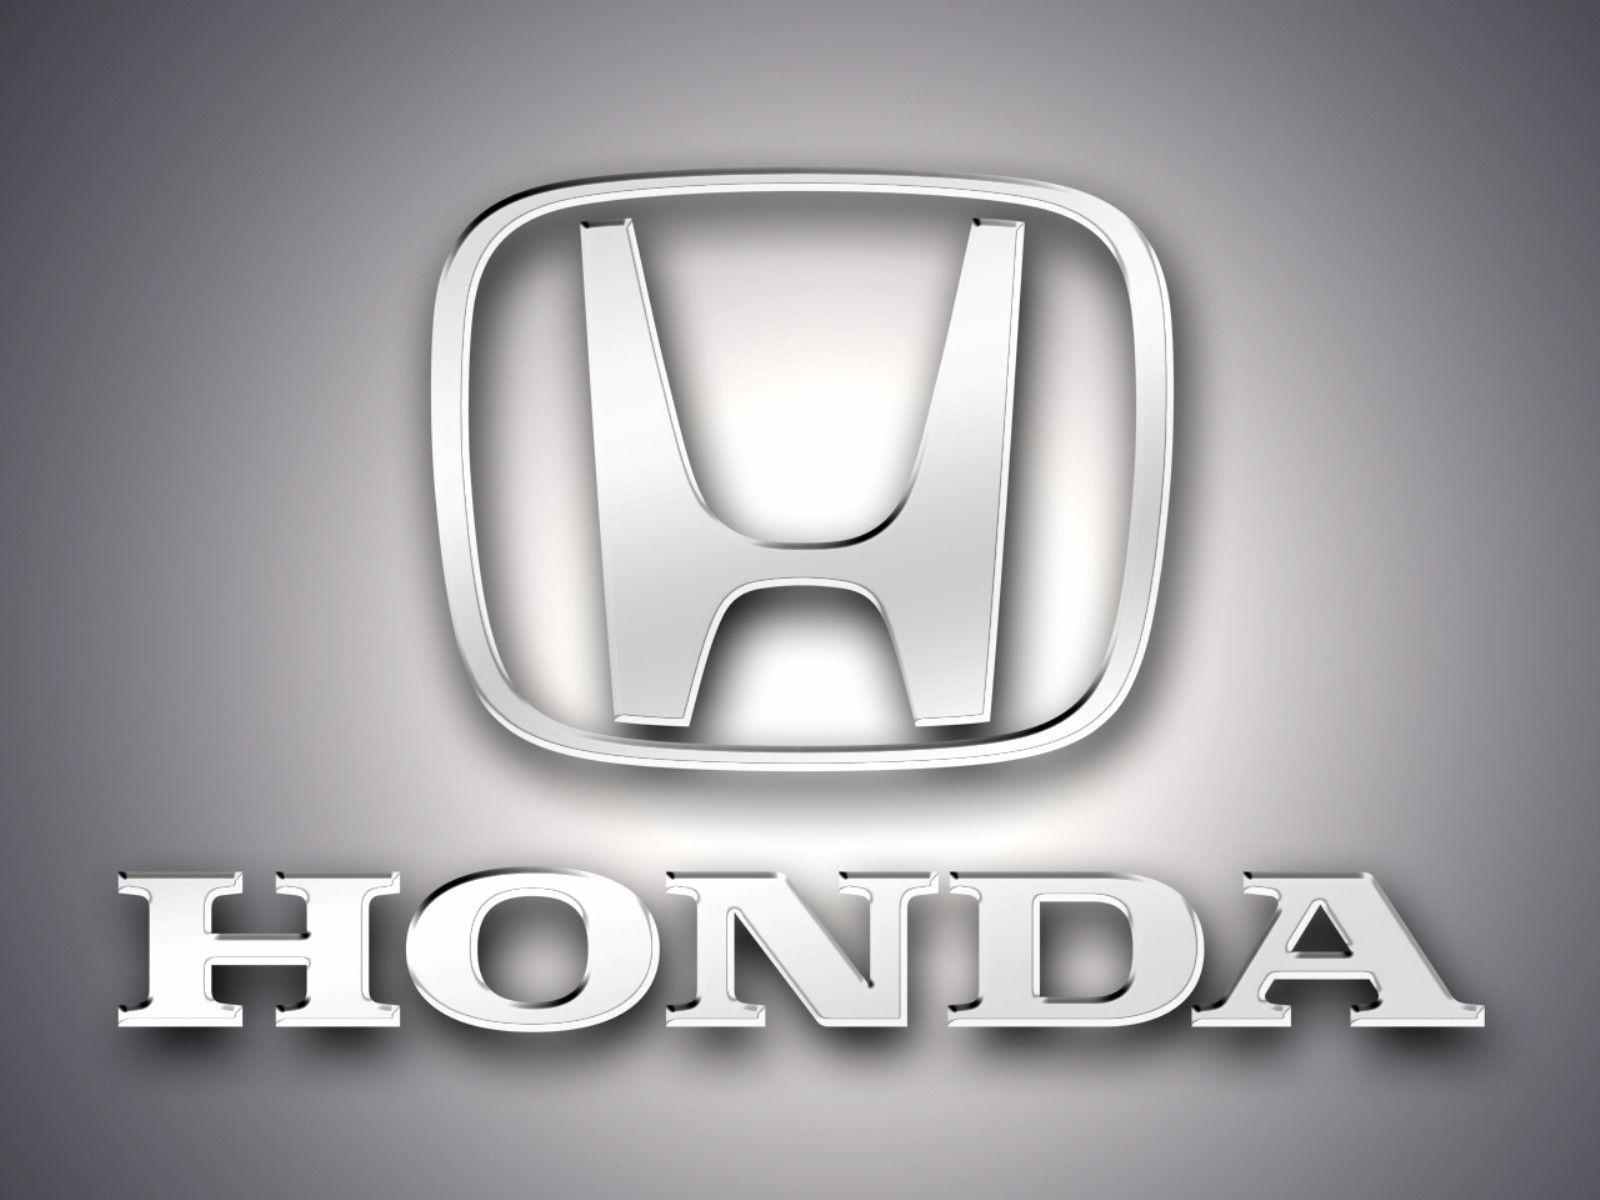 I-Honda Logo Wallpapers - YL Computing